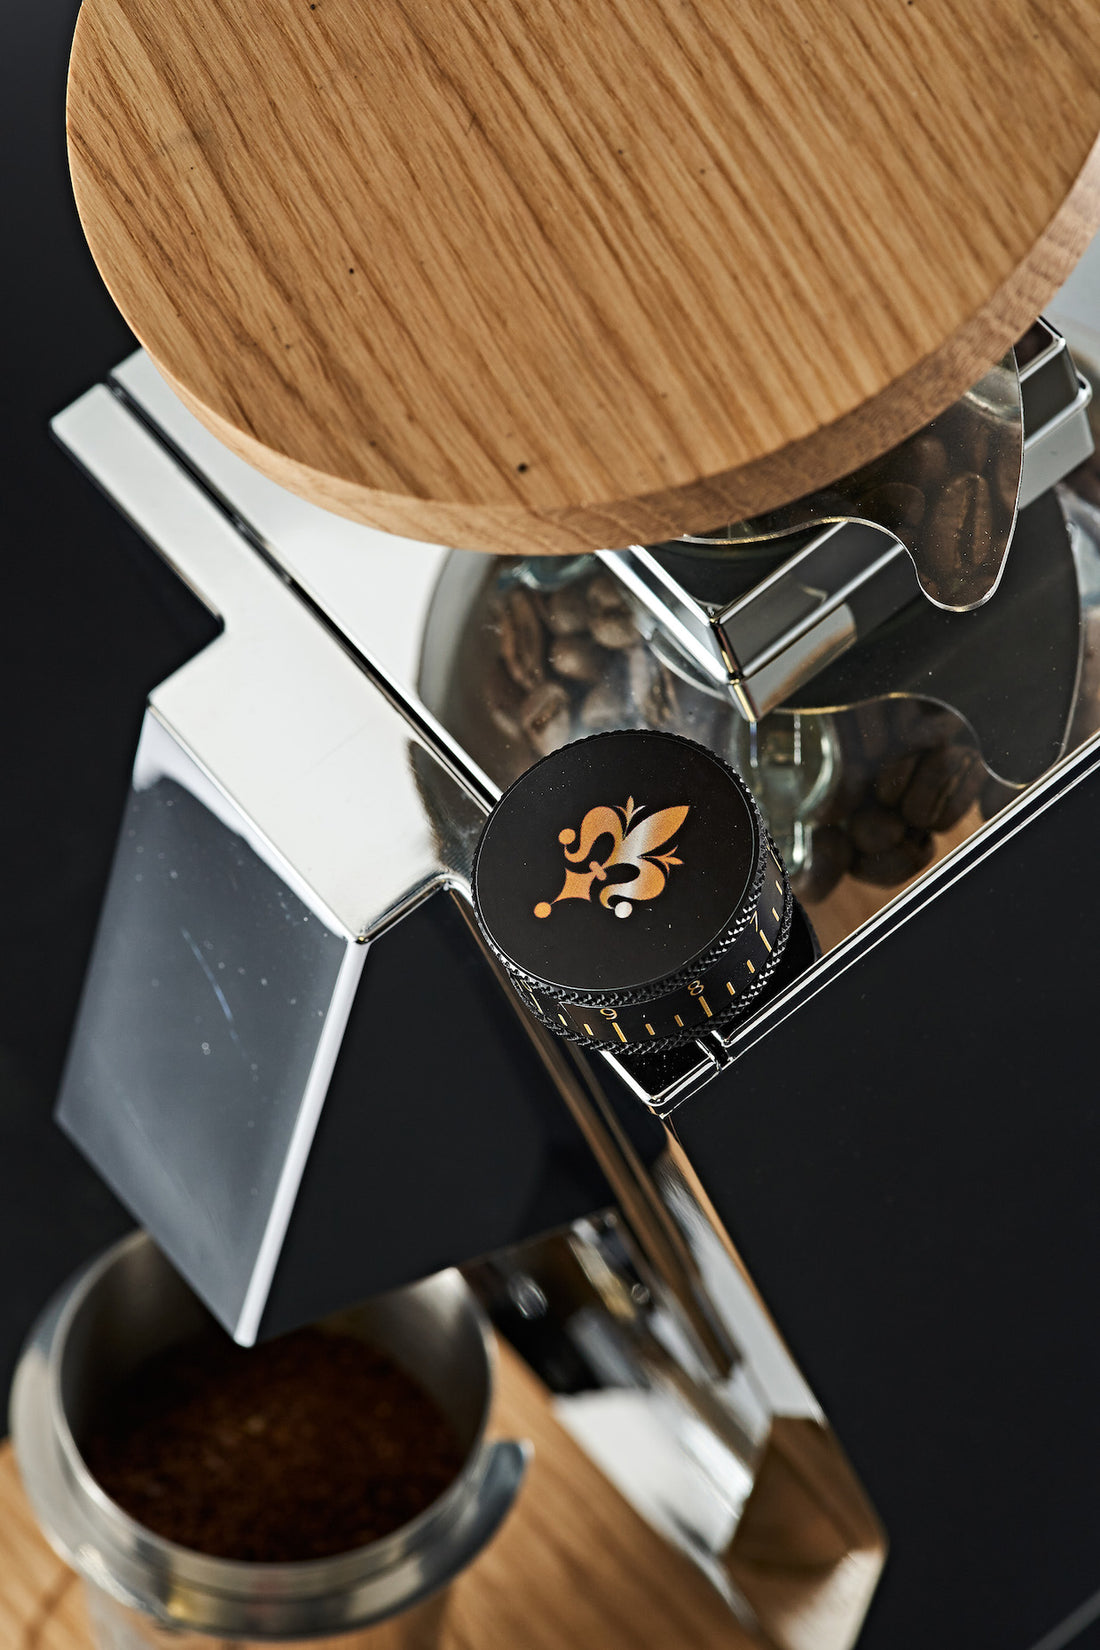 Eureka Oro Mignon Single Dose Coffee Grinder v1.1 - Australian Stock/Warranty - Chrome